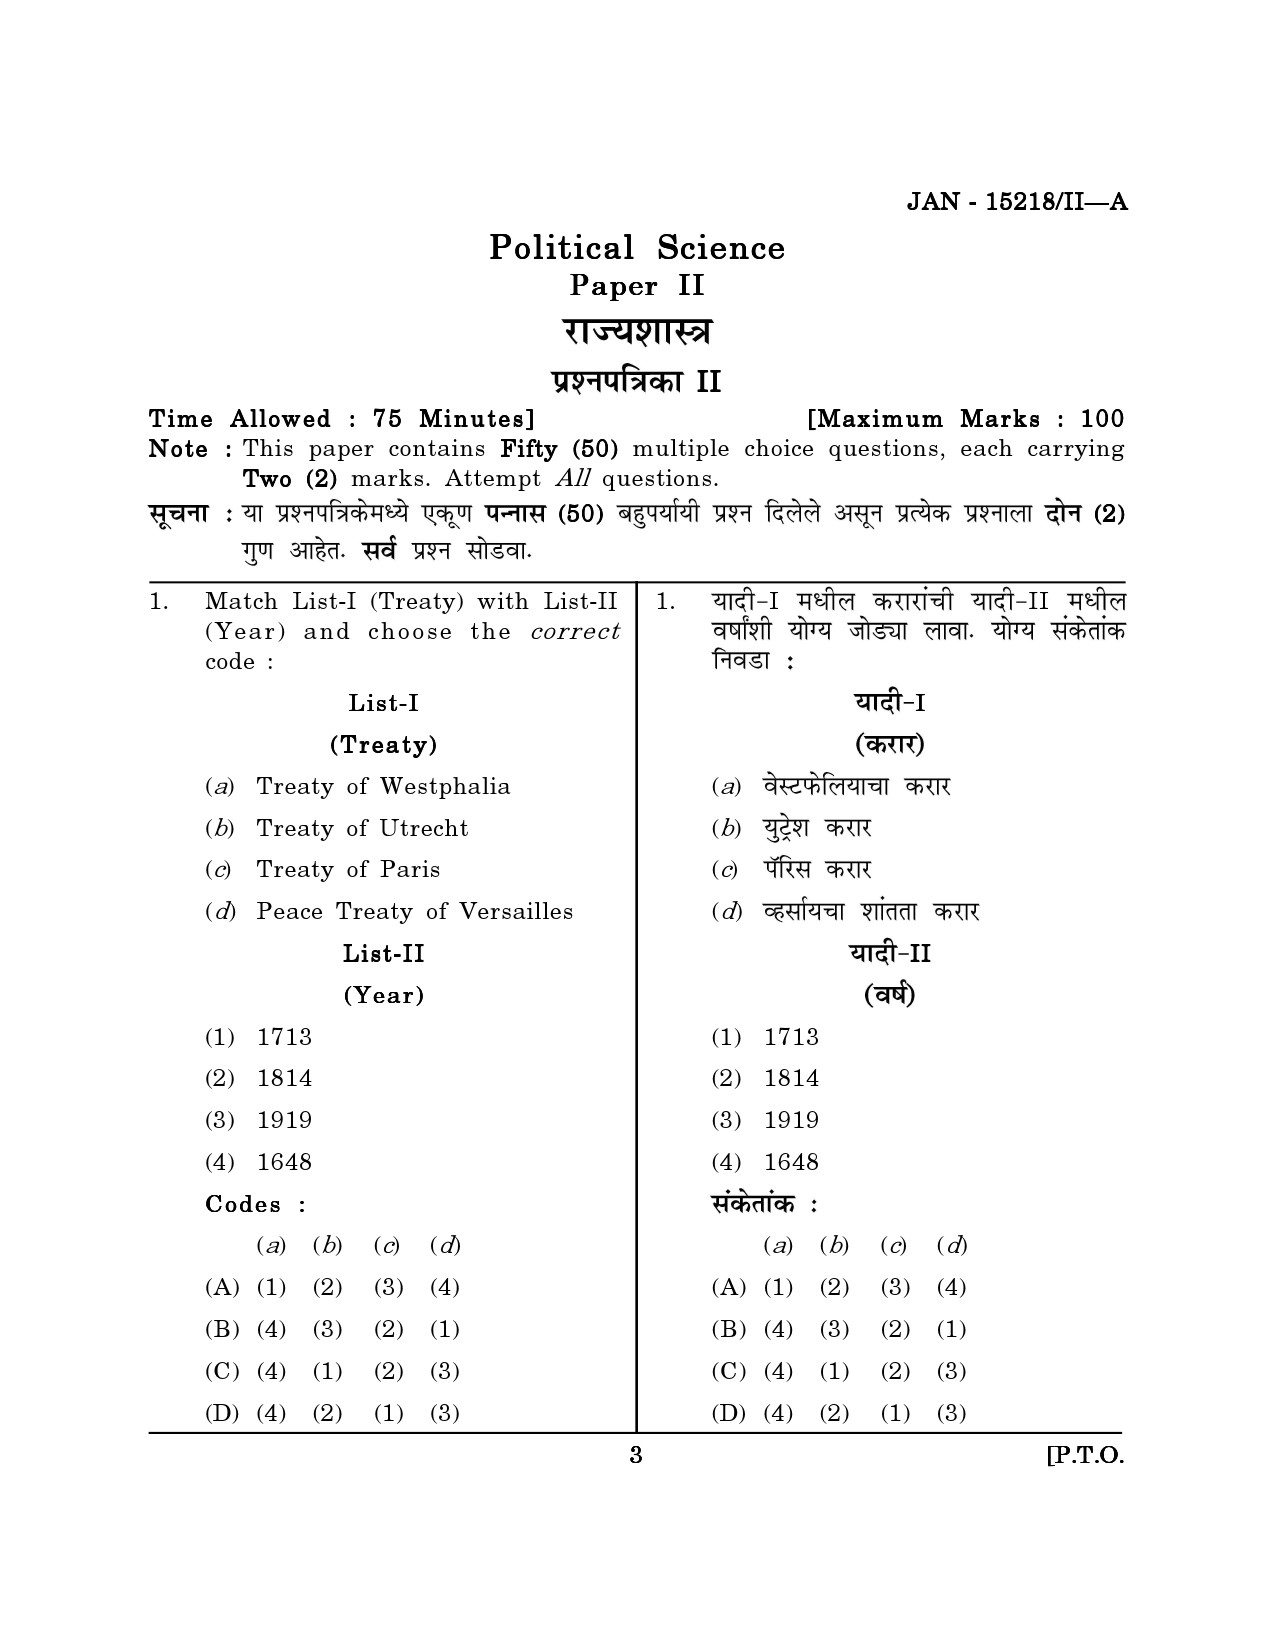 Maharashtra SET Political Science Question Paper II January 2018 2